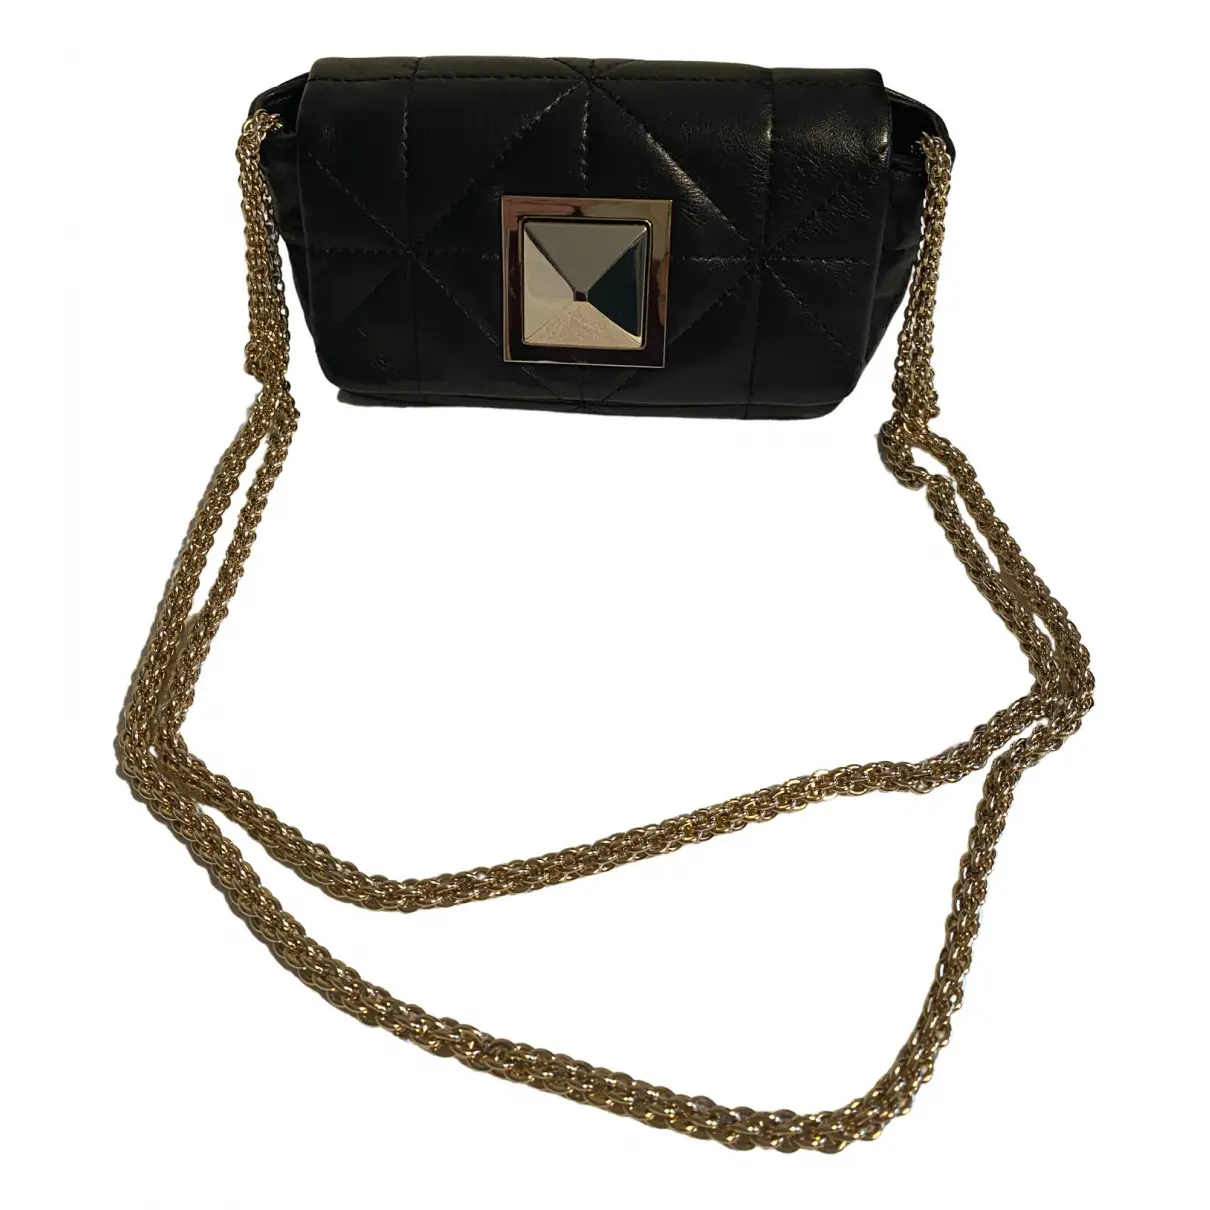 Le Copain leather handbag Sonia Rykiel